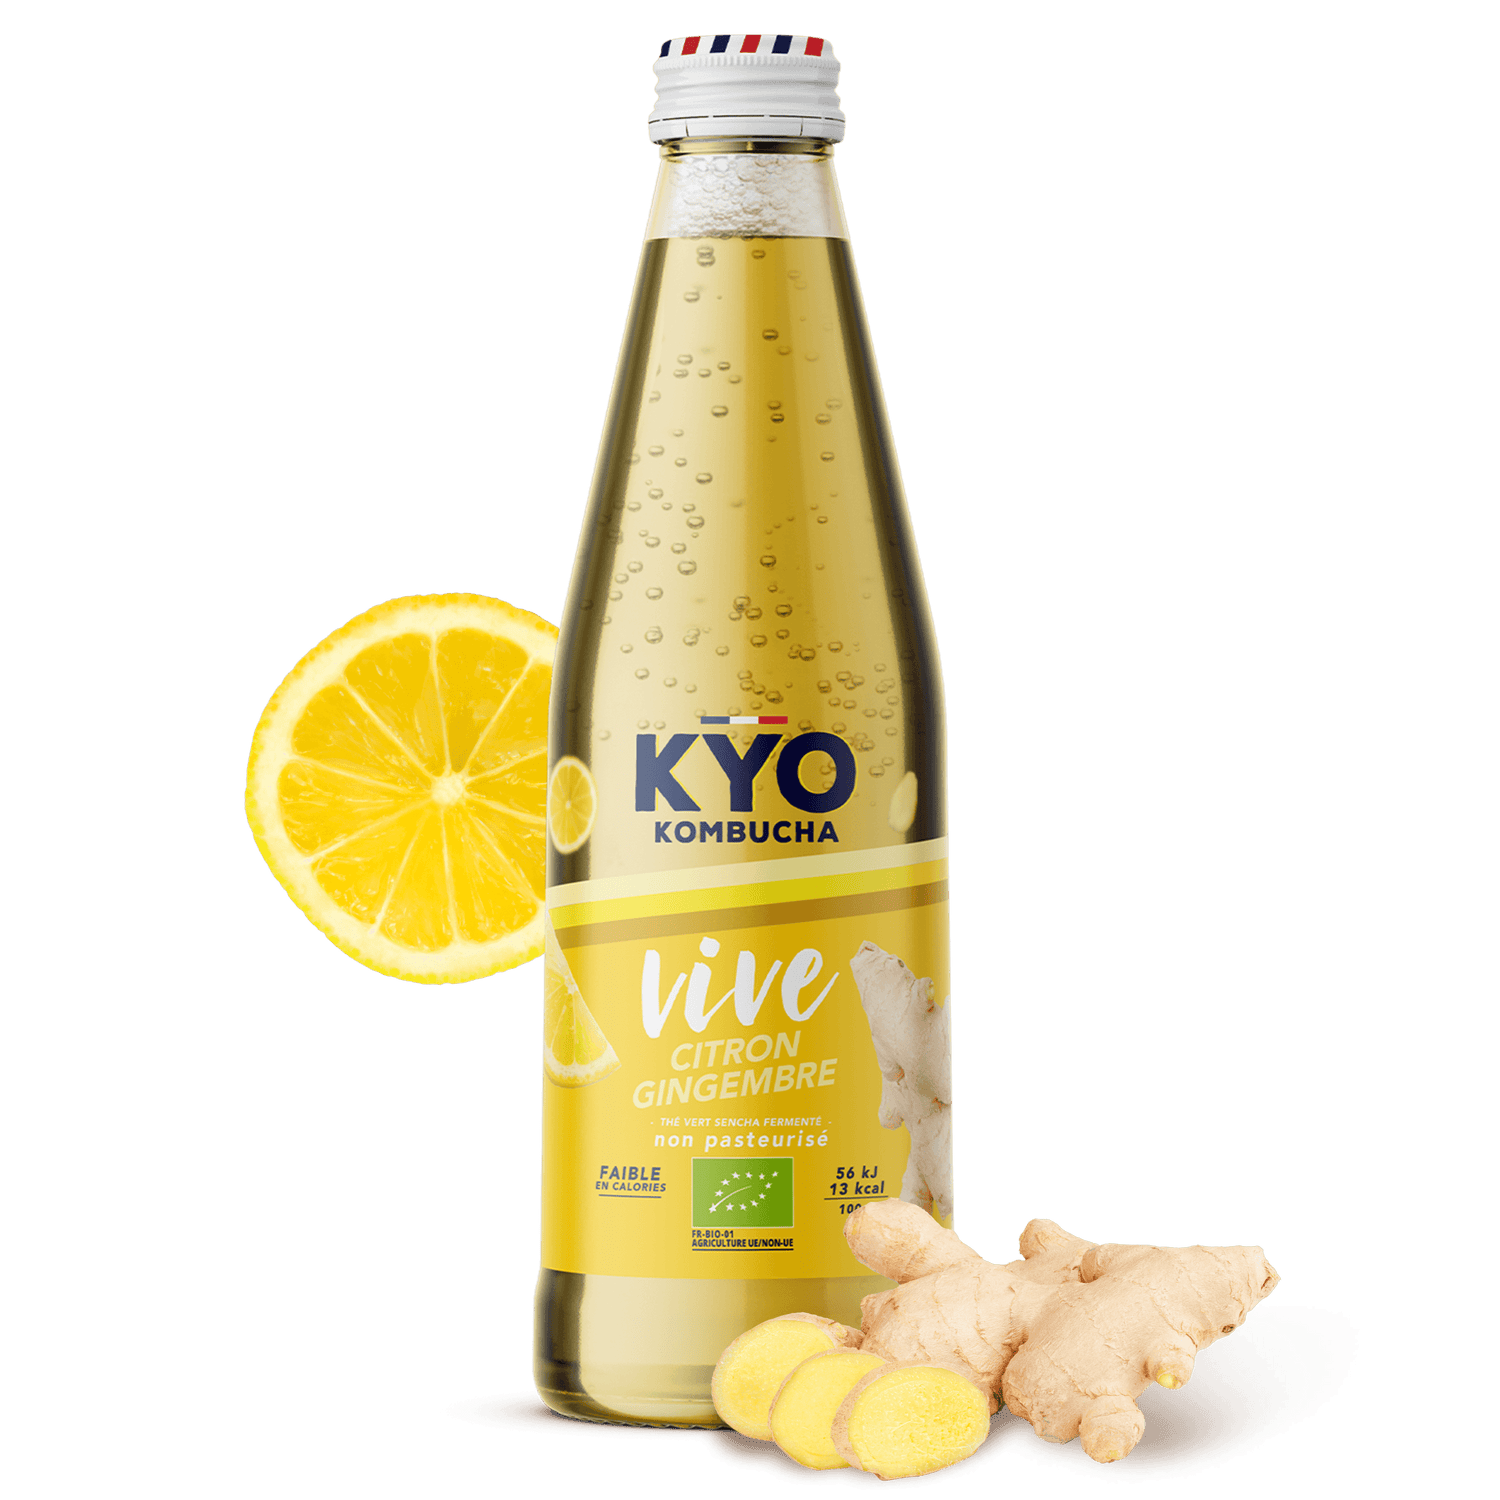 KYO KOMBUCHA - Vive Citron Gingembre